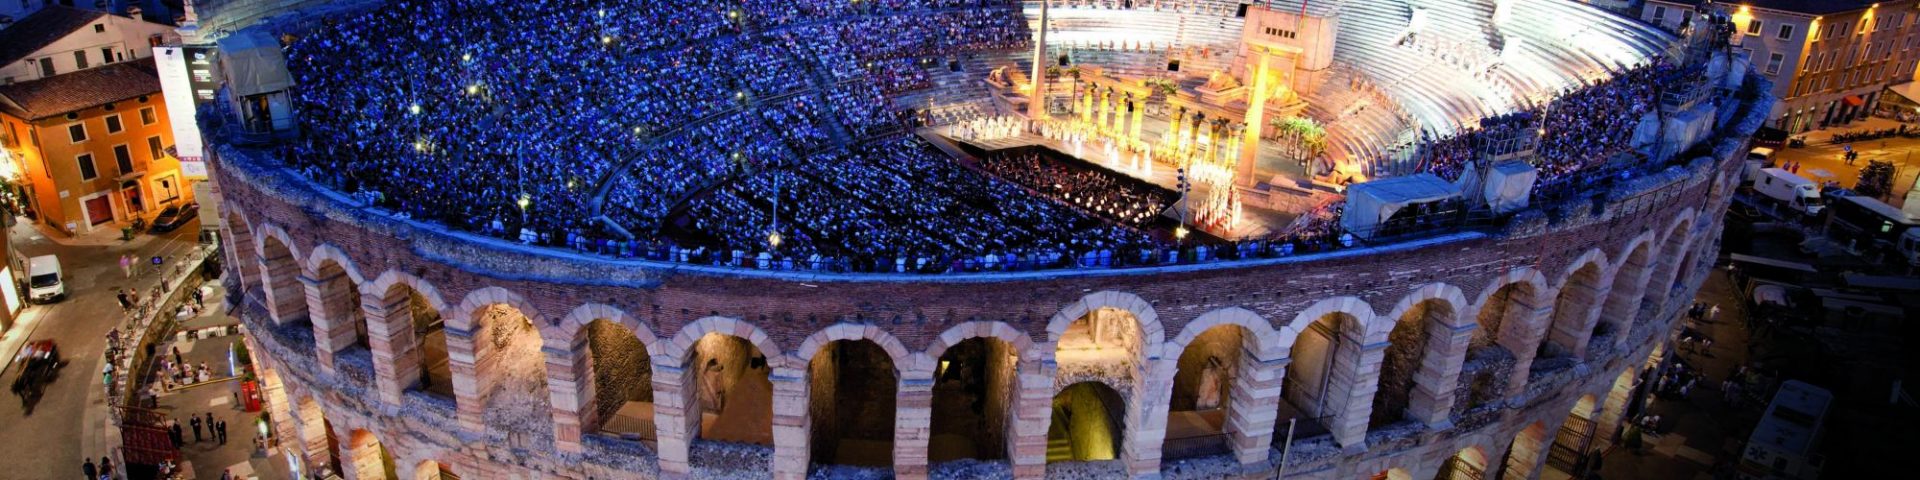 Arena di Verona 2021: confermati i concerti di Emma, Gabbani e Benji&Fede